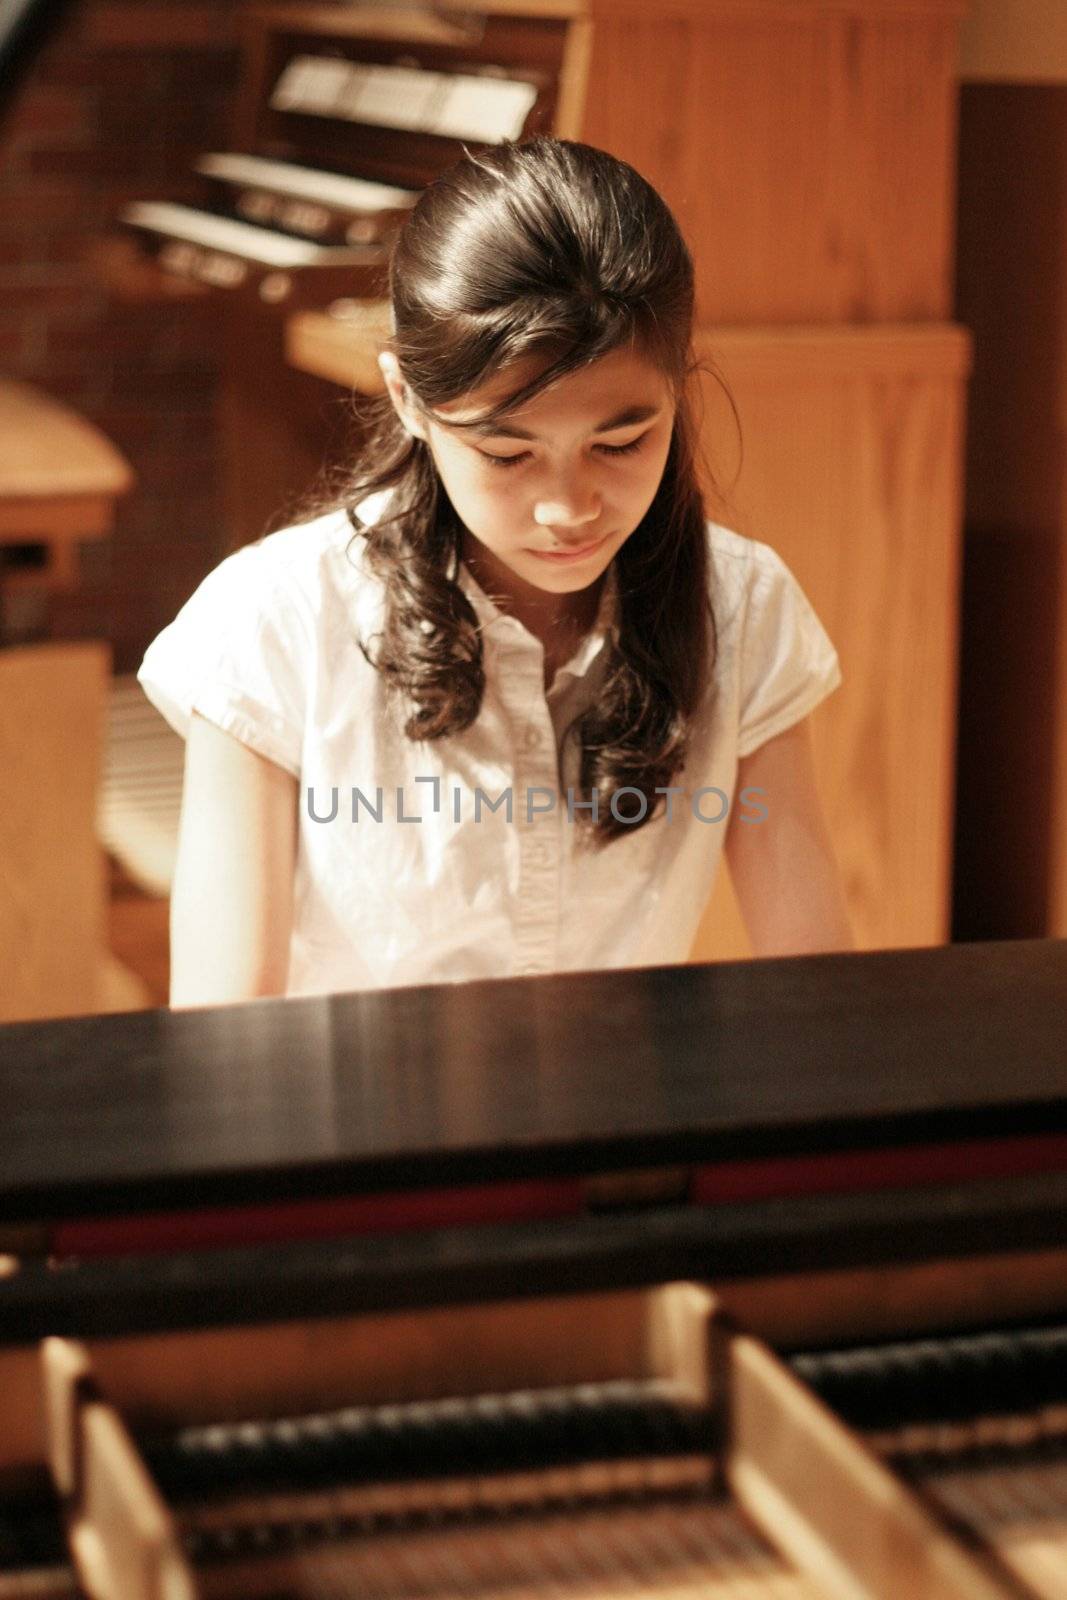 Young teen girl playing piano at recital